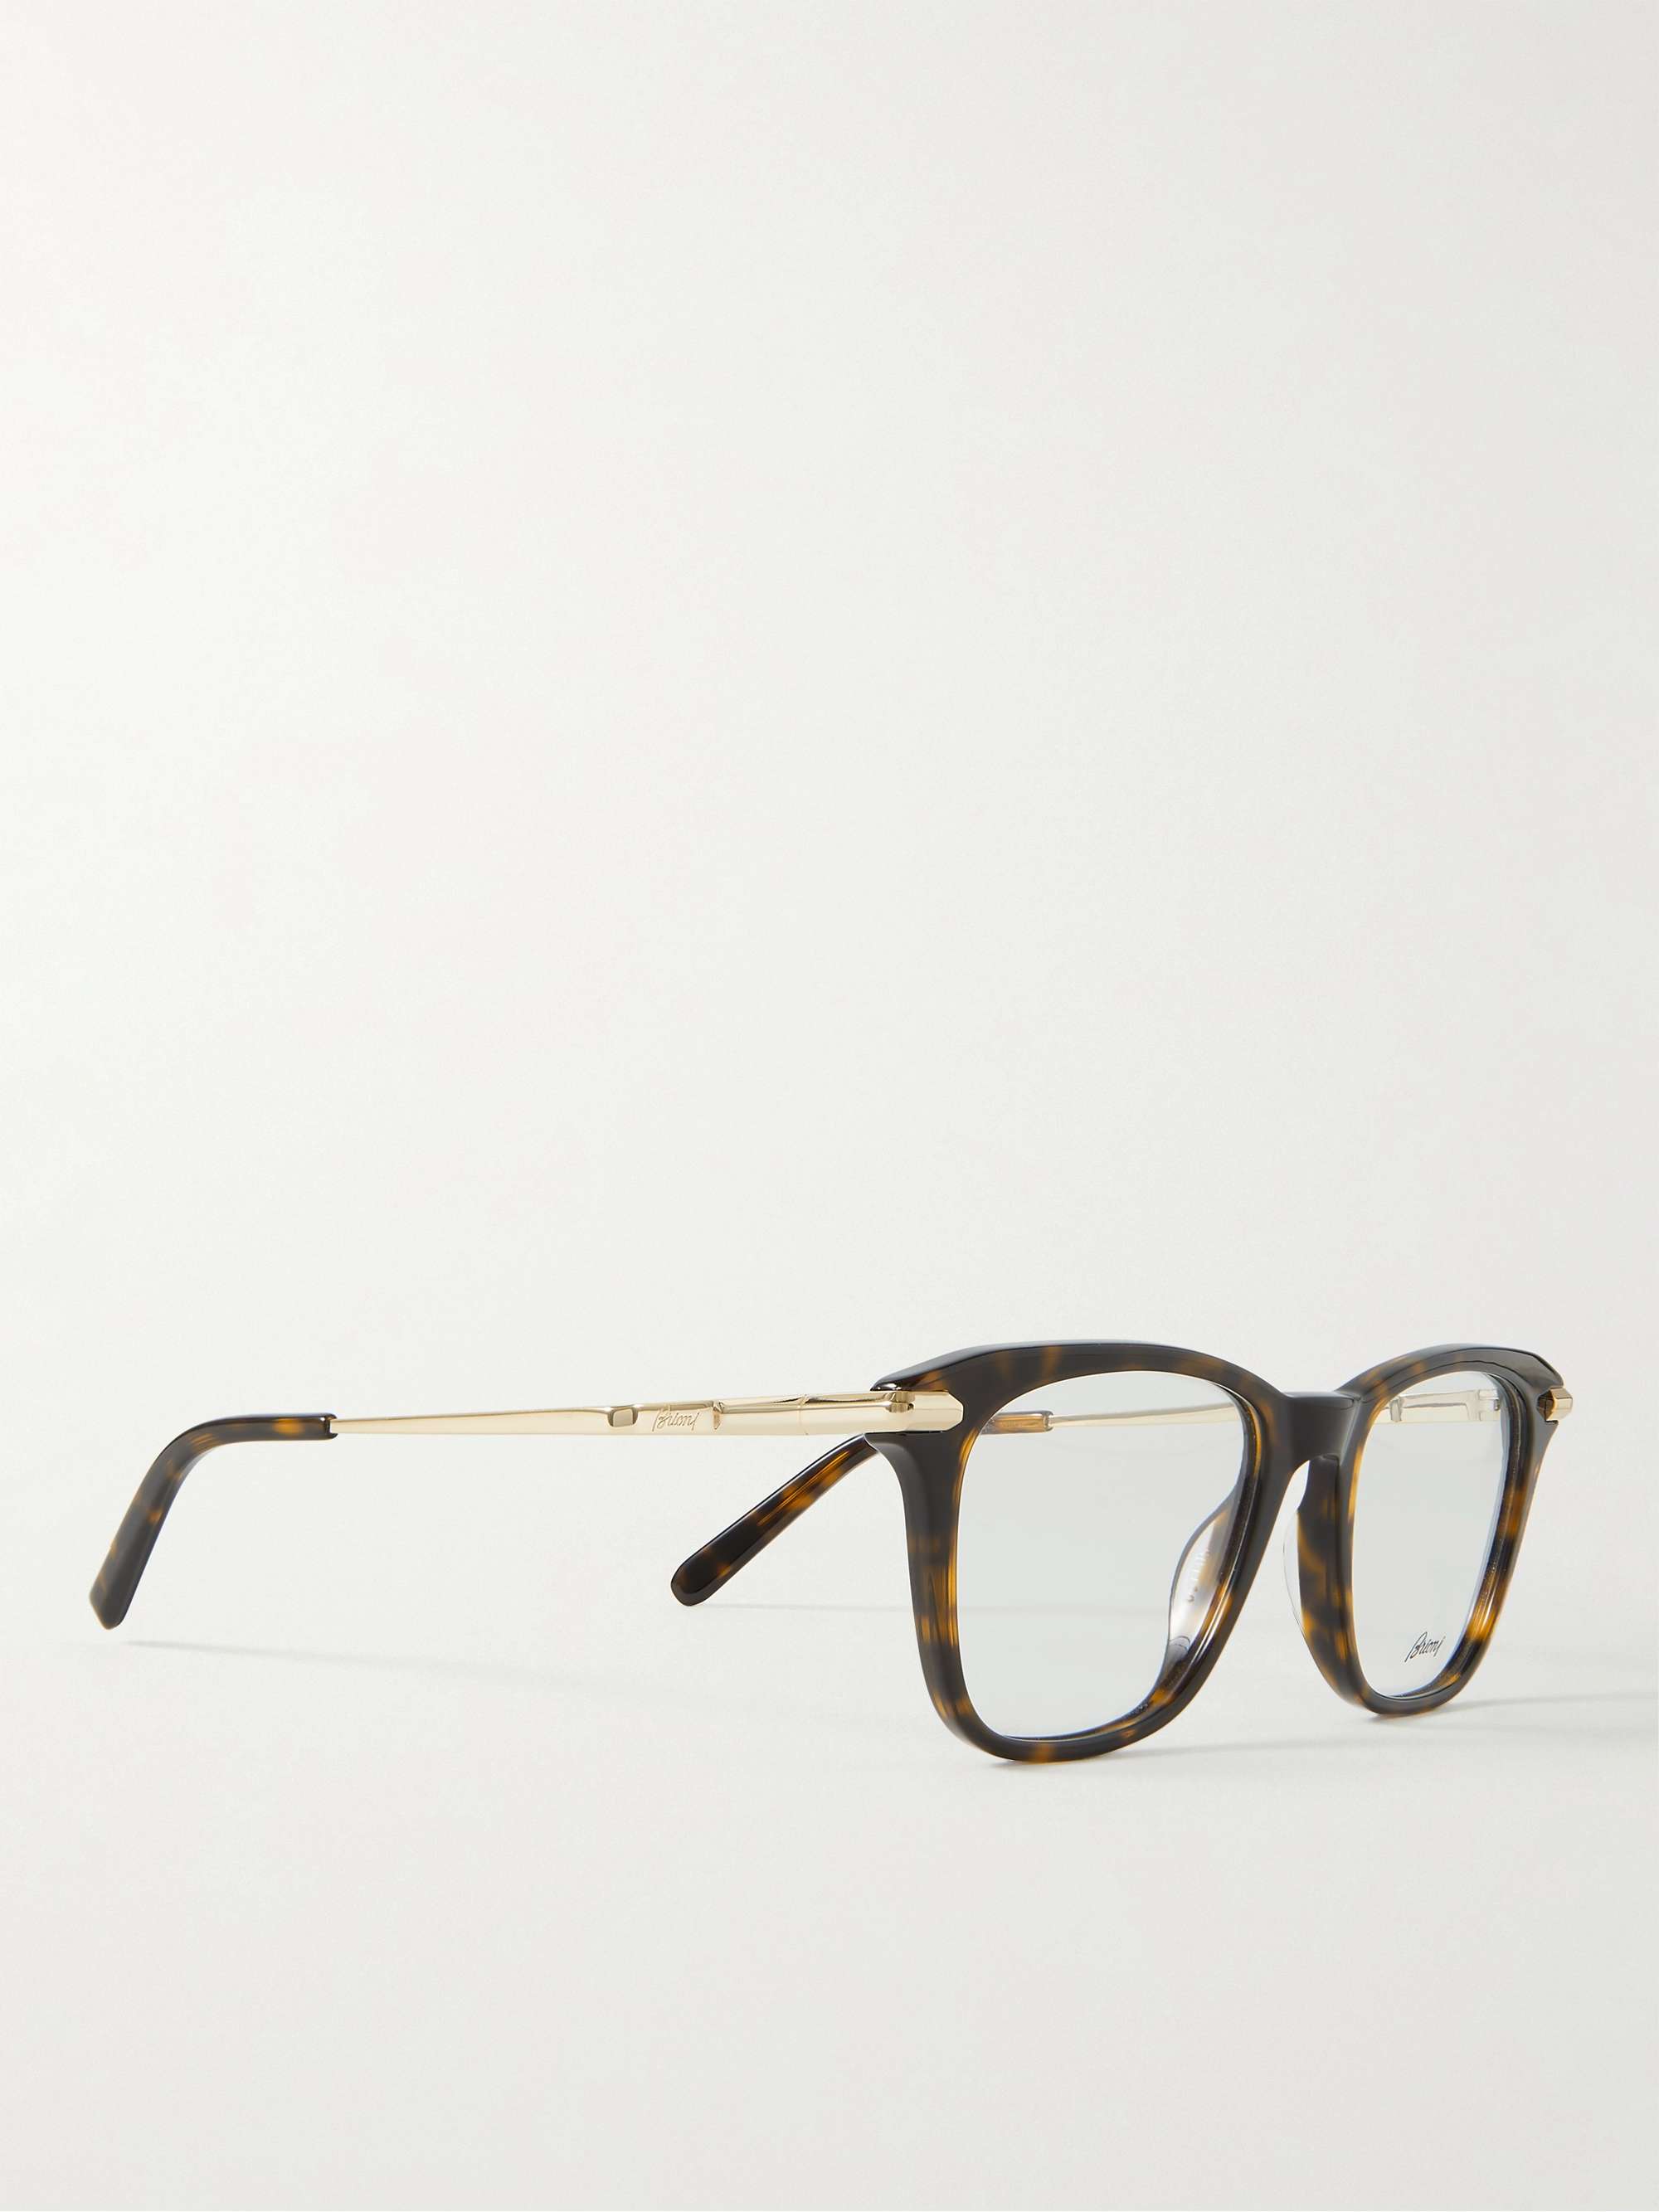 BRIONI D-Frame Tortoiseshell Acetate and Gold-Tone Optical Glasses